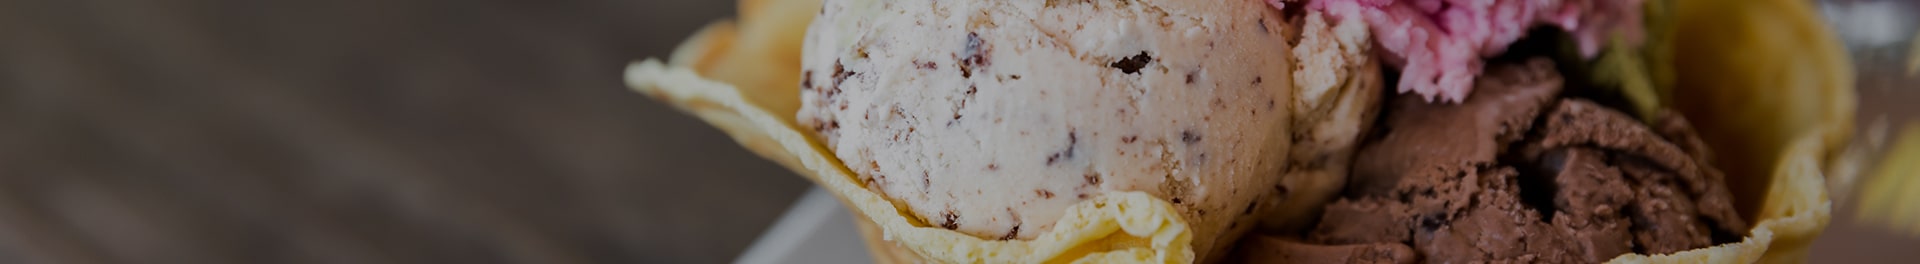 Several flavors of ice cream in a cone.